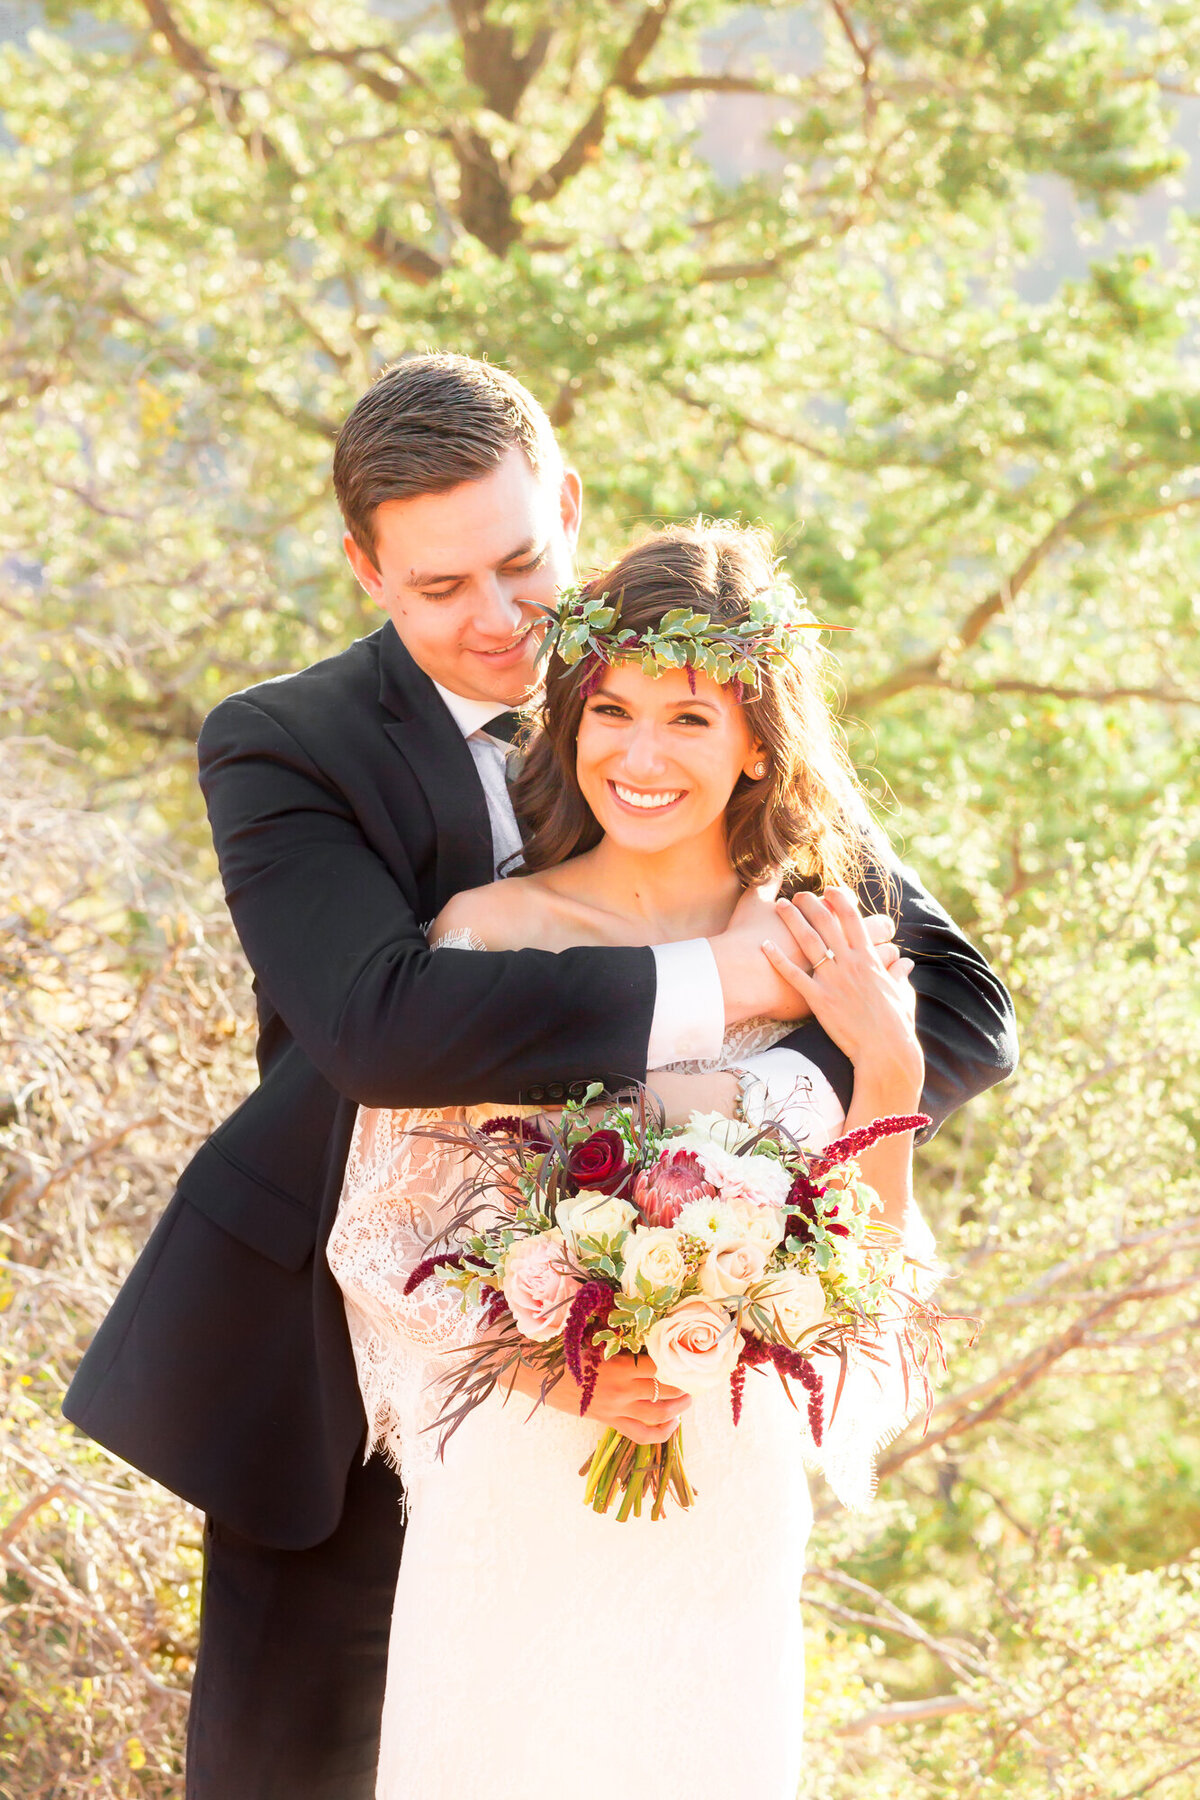 Wedding Portrait Photography - Sedona, Arizona - Bayley Jordan Photography